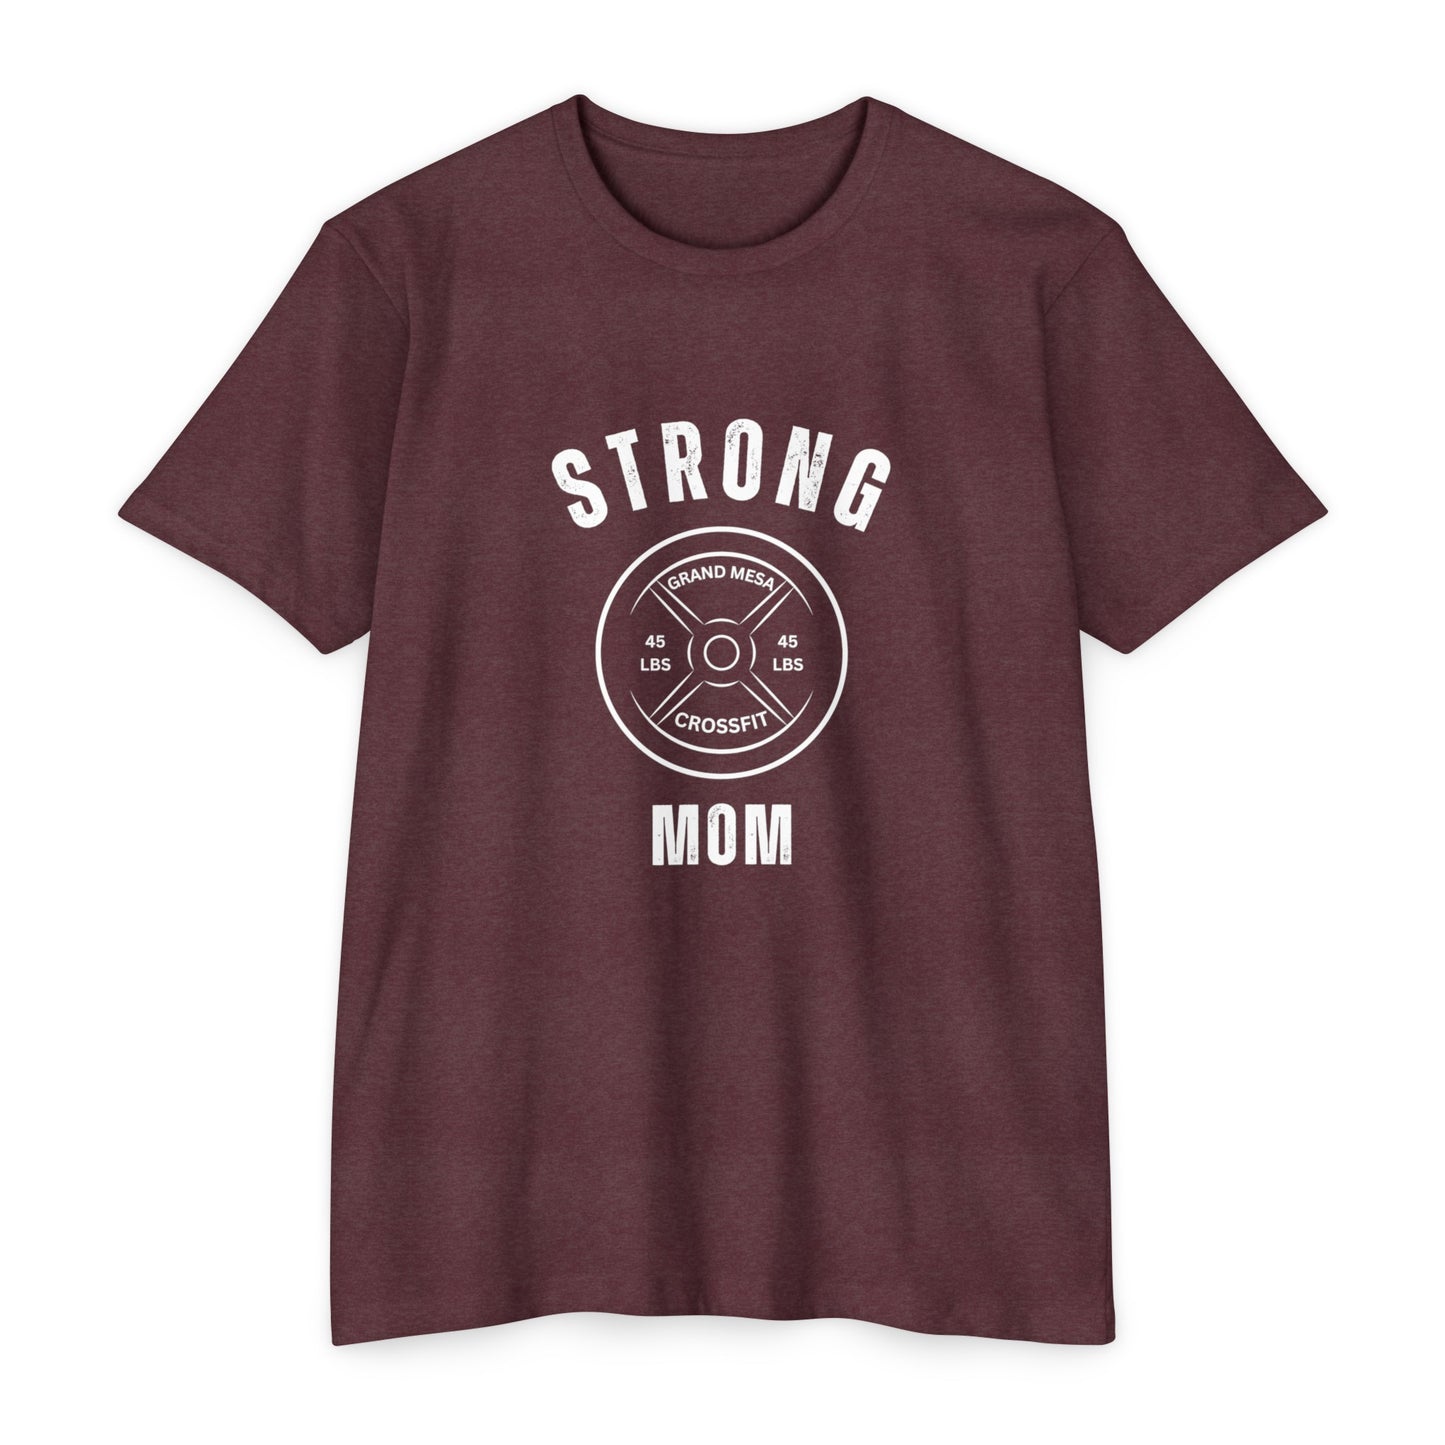 Strong Mom Tee